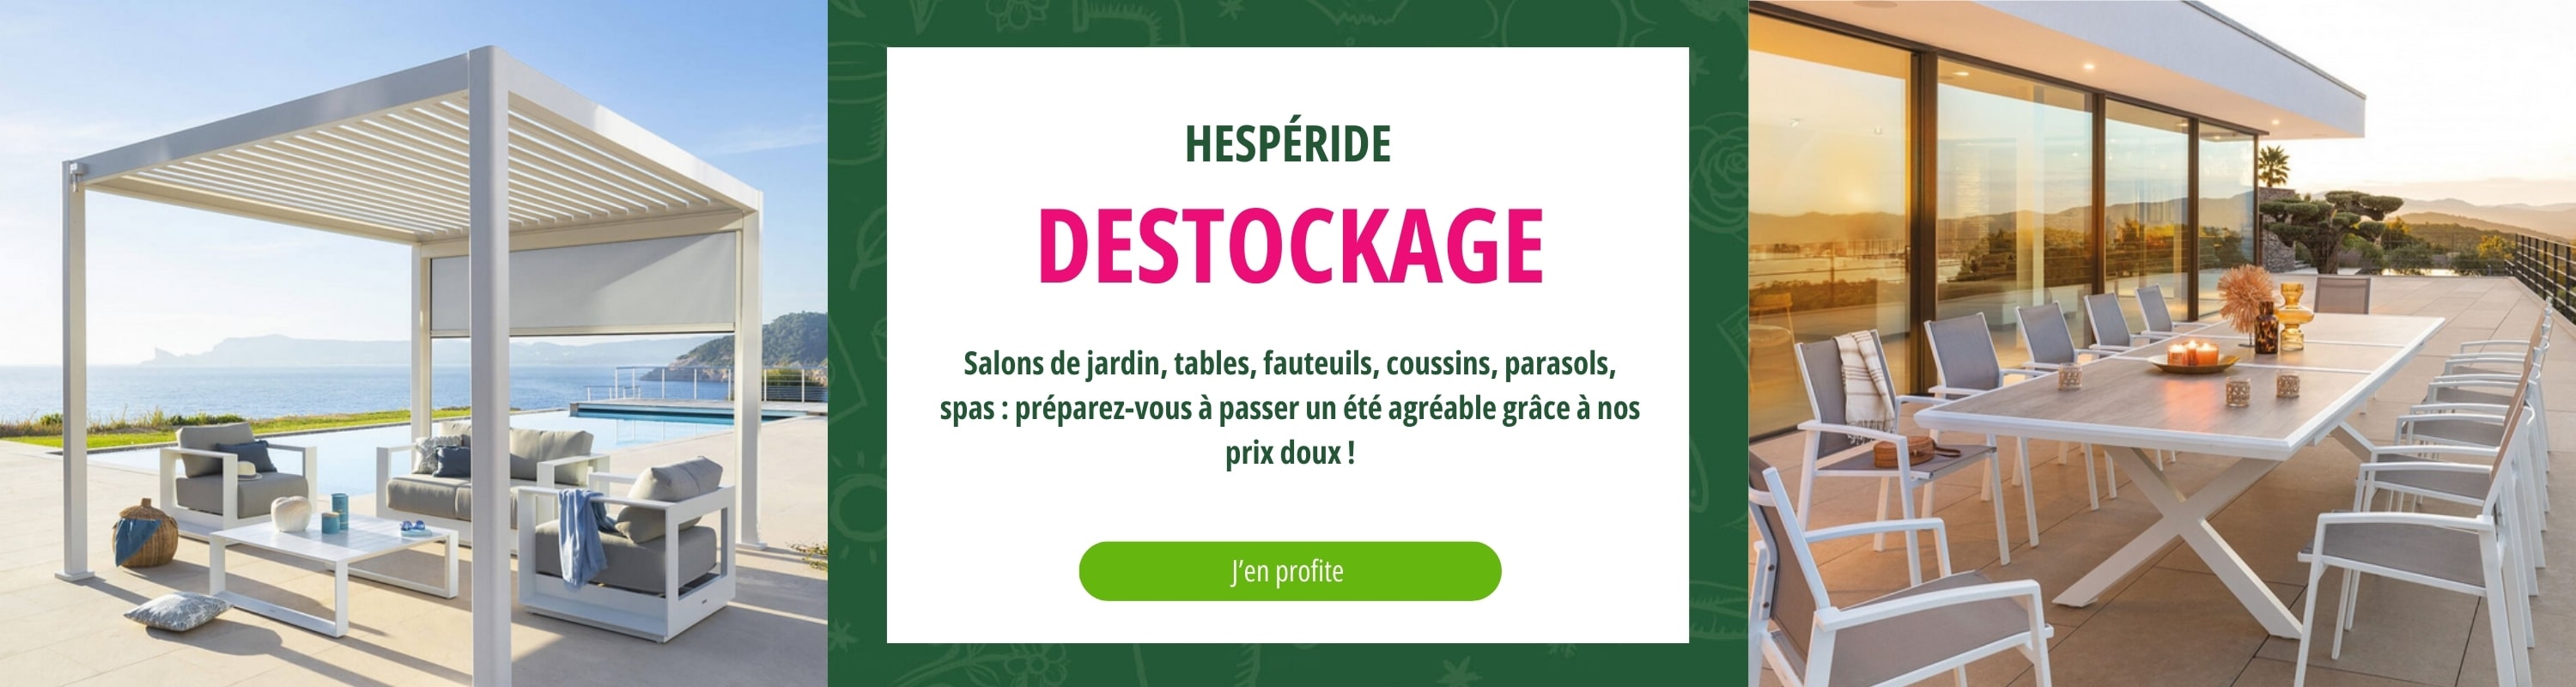 Destockage HESPERIDE Desktop